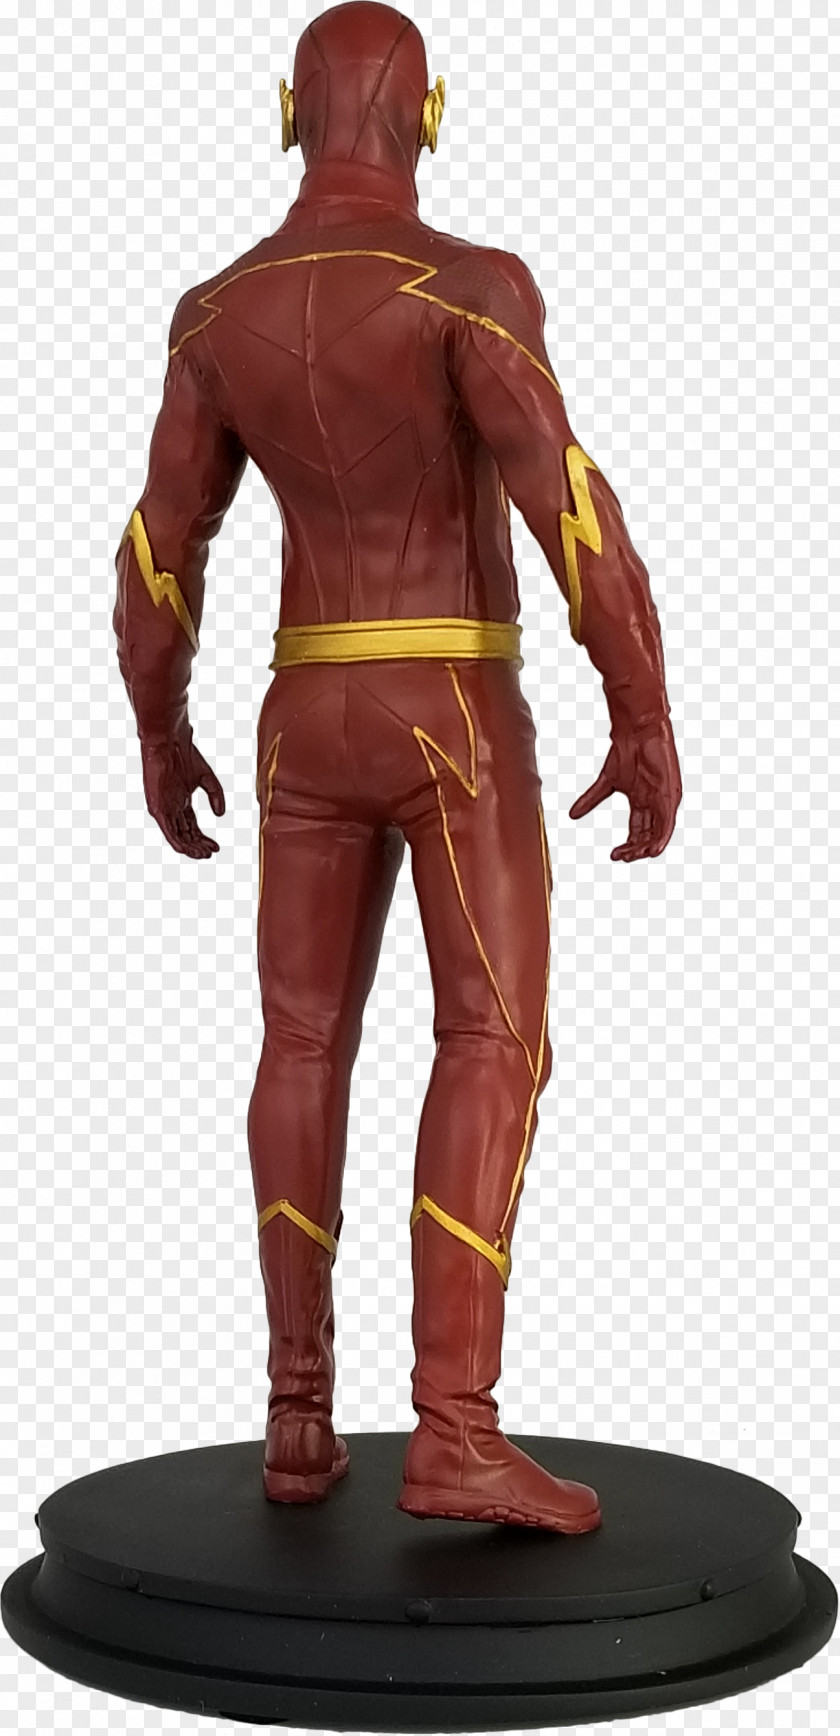 Season 4Deathstroke Hunter Zolomon Green Arrow Captain Cold Deathstroke The Flash PNG